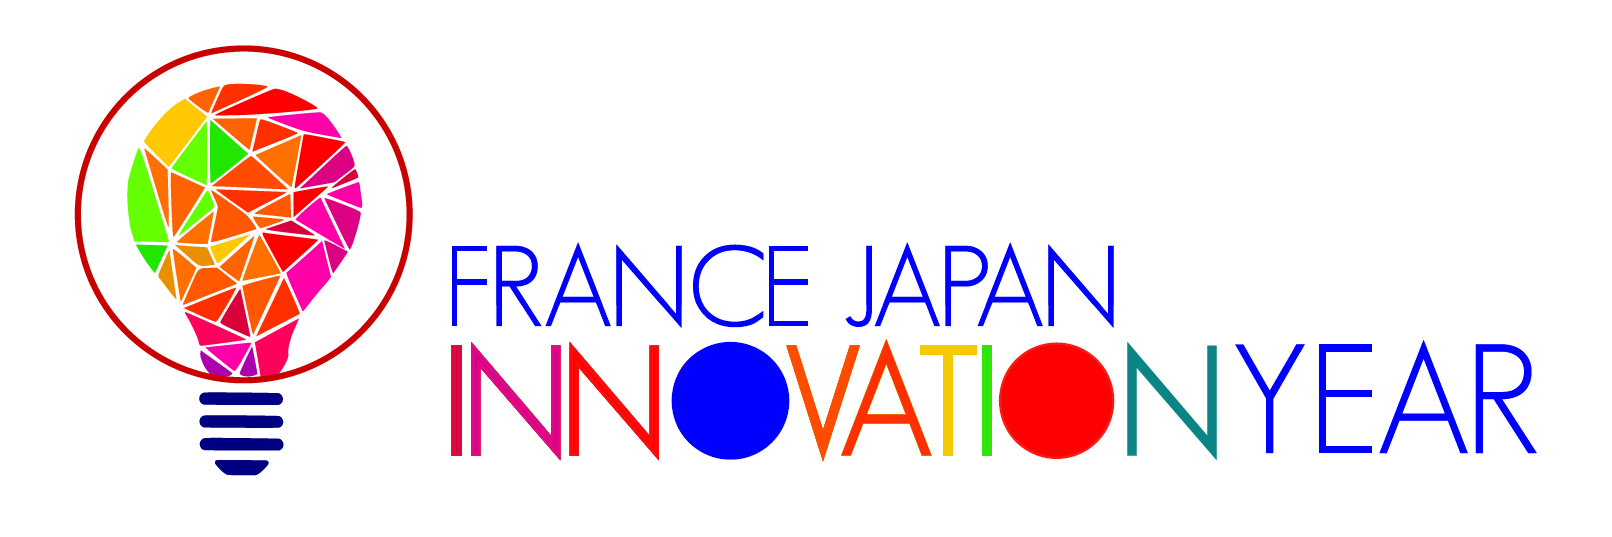 FRANCE JAPAN INNOVATION YEAR